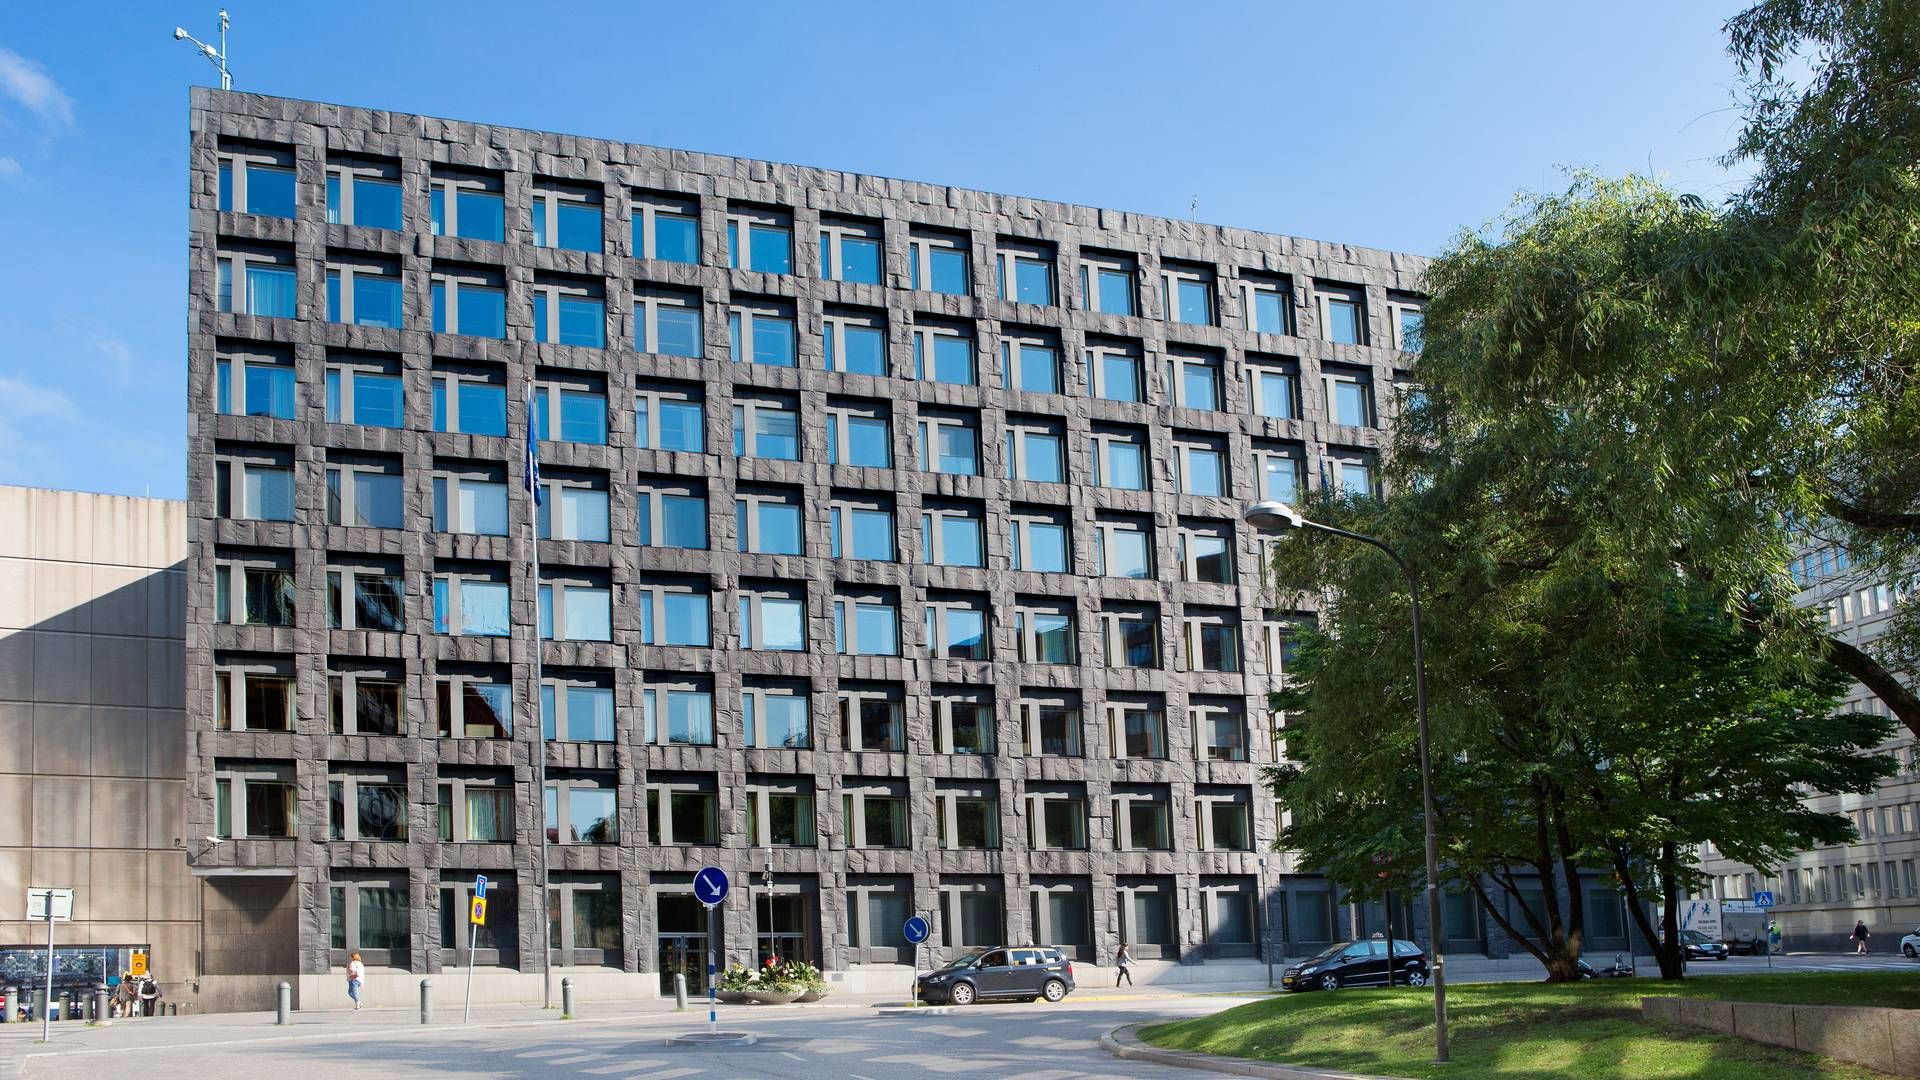 The Swedish central bank, the Riksbank building | Photo: Riksbank